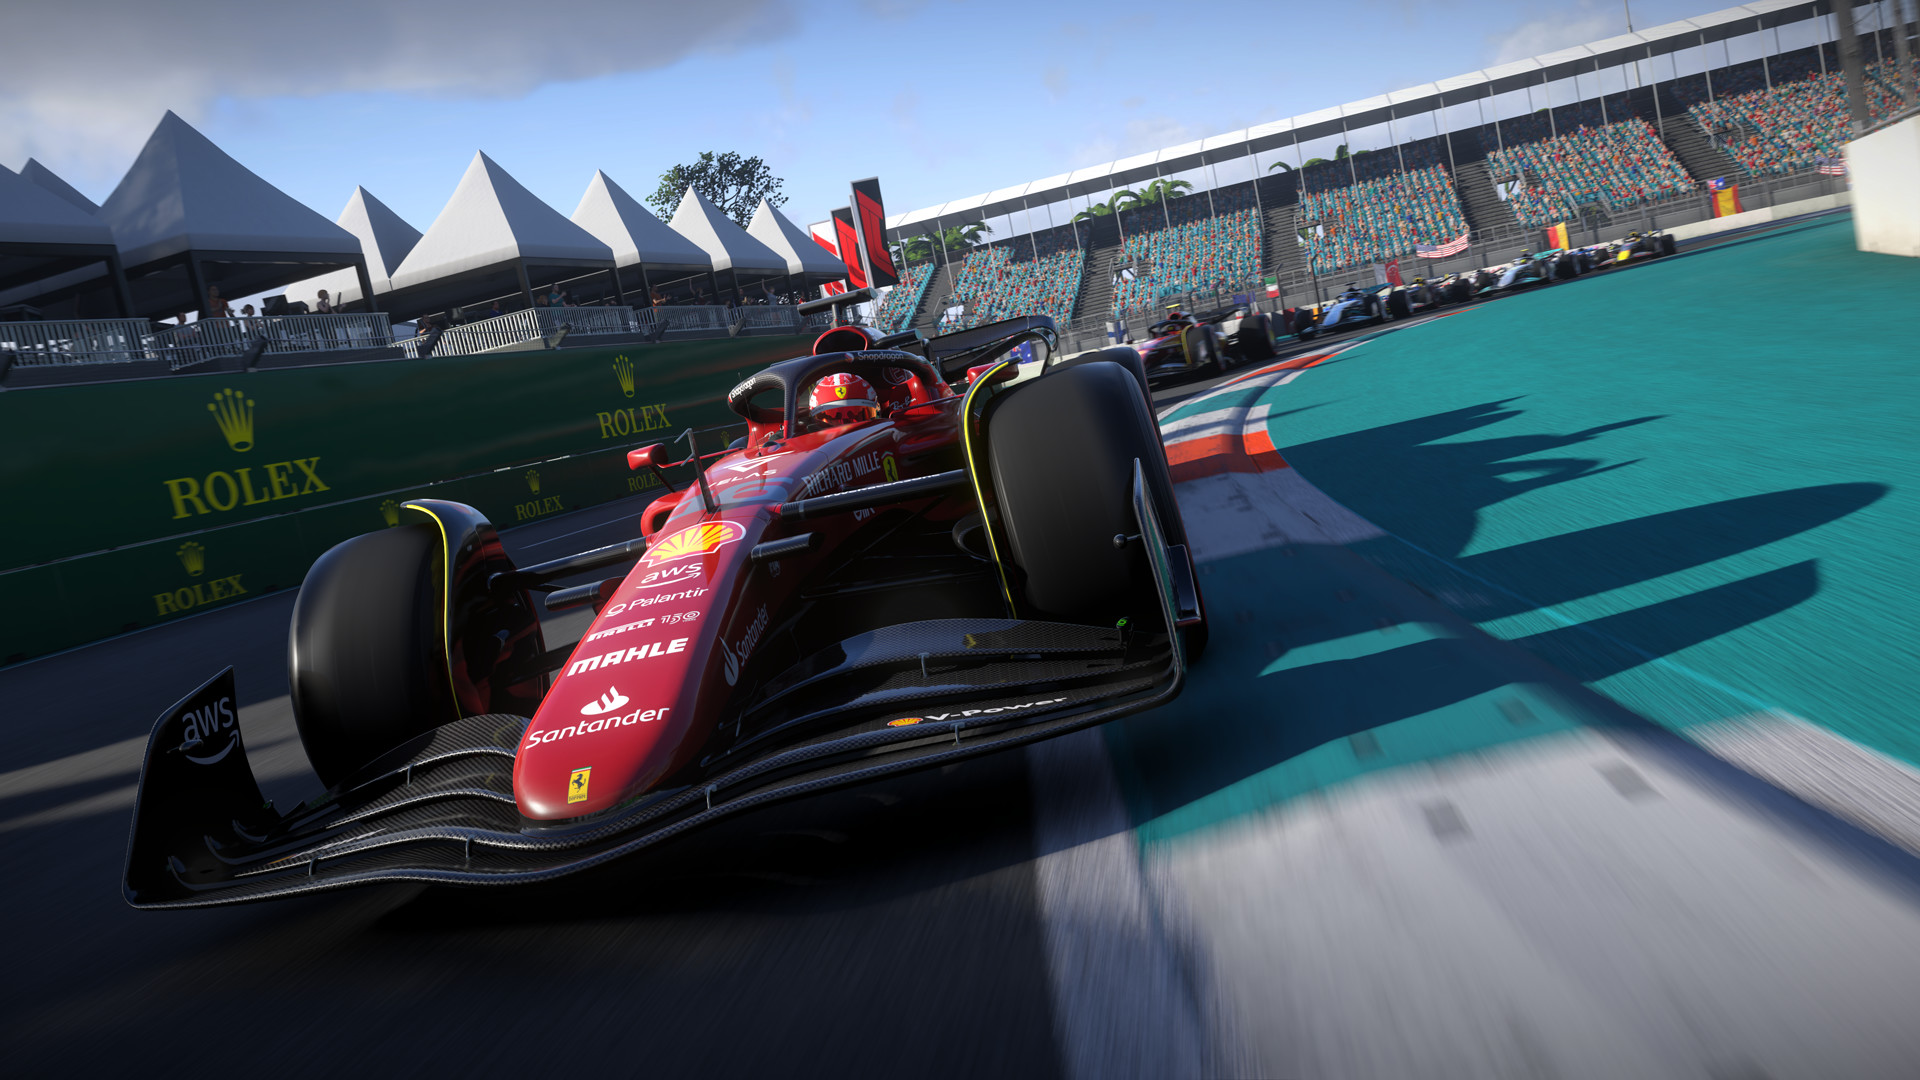 《F1 2022》现已正式发售 Steam上褒贬不一